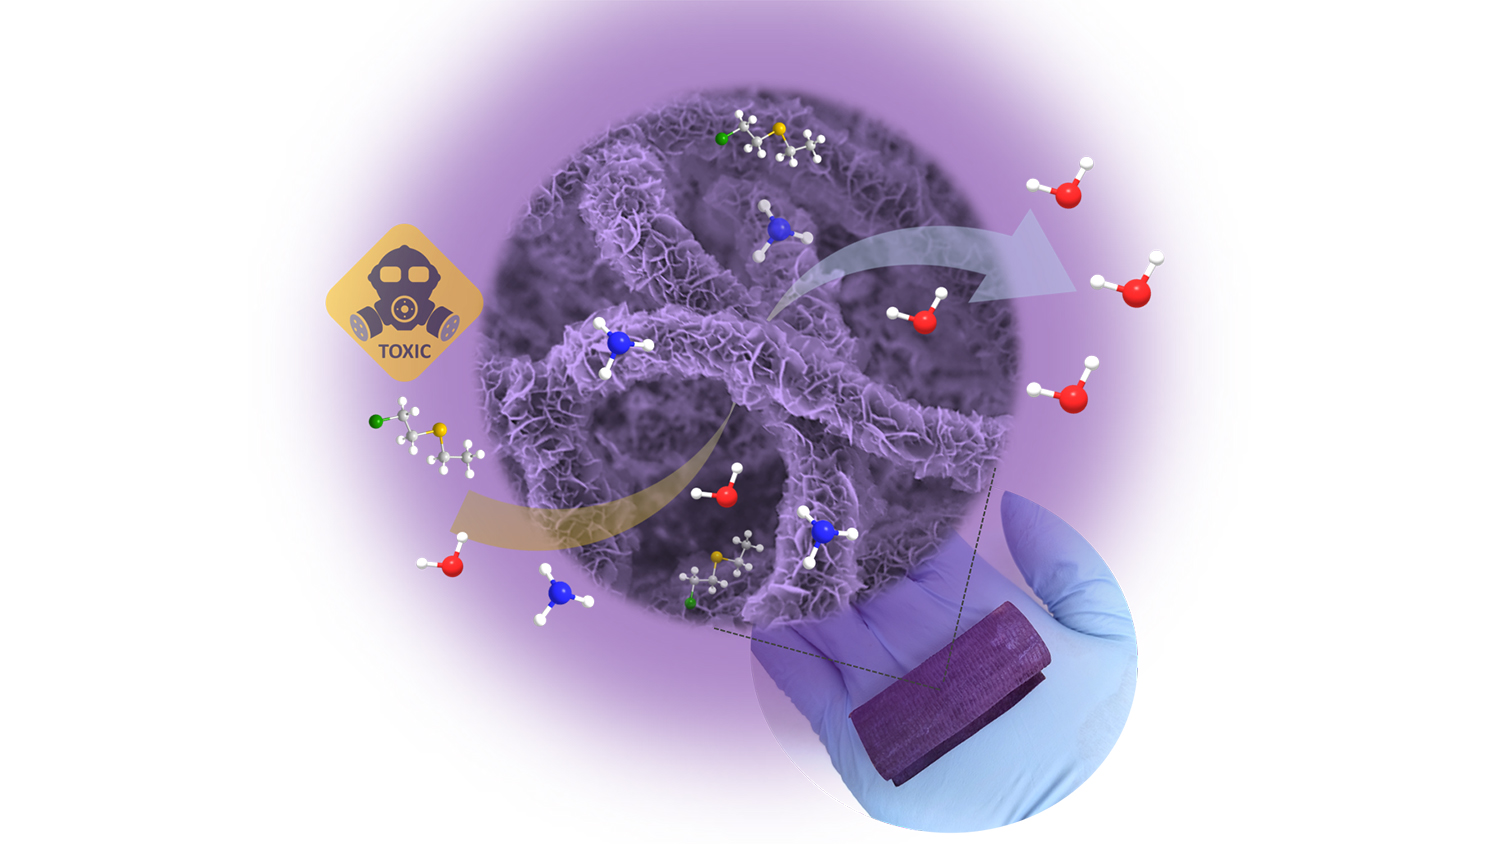 Illustration showing molecules, microscope image and hazardous chemical symbol